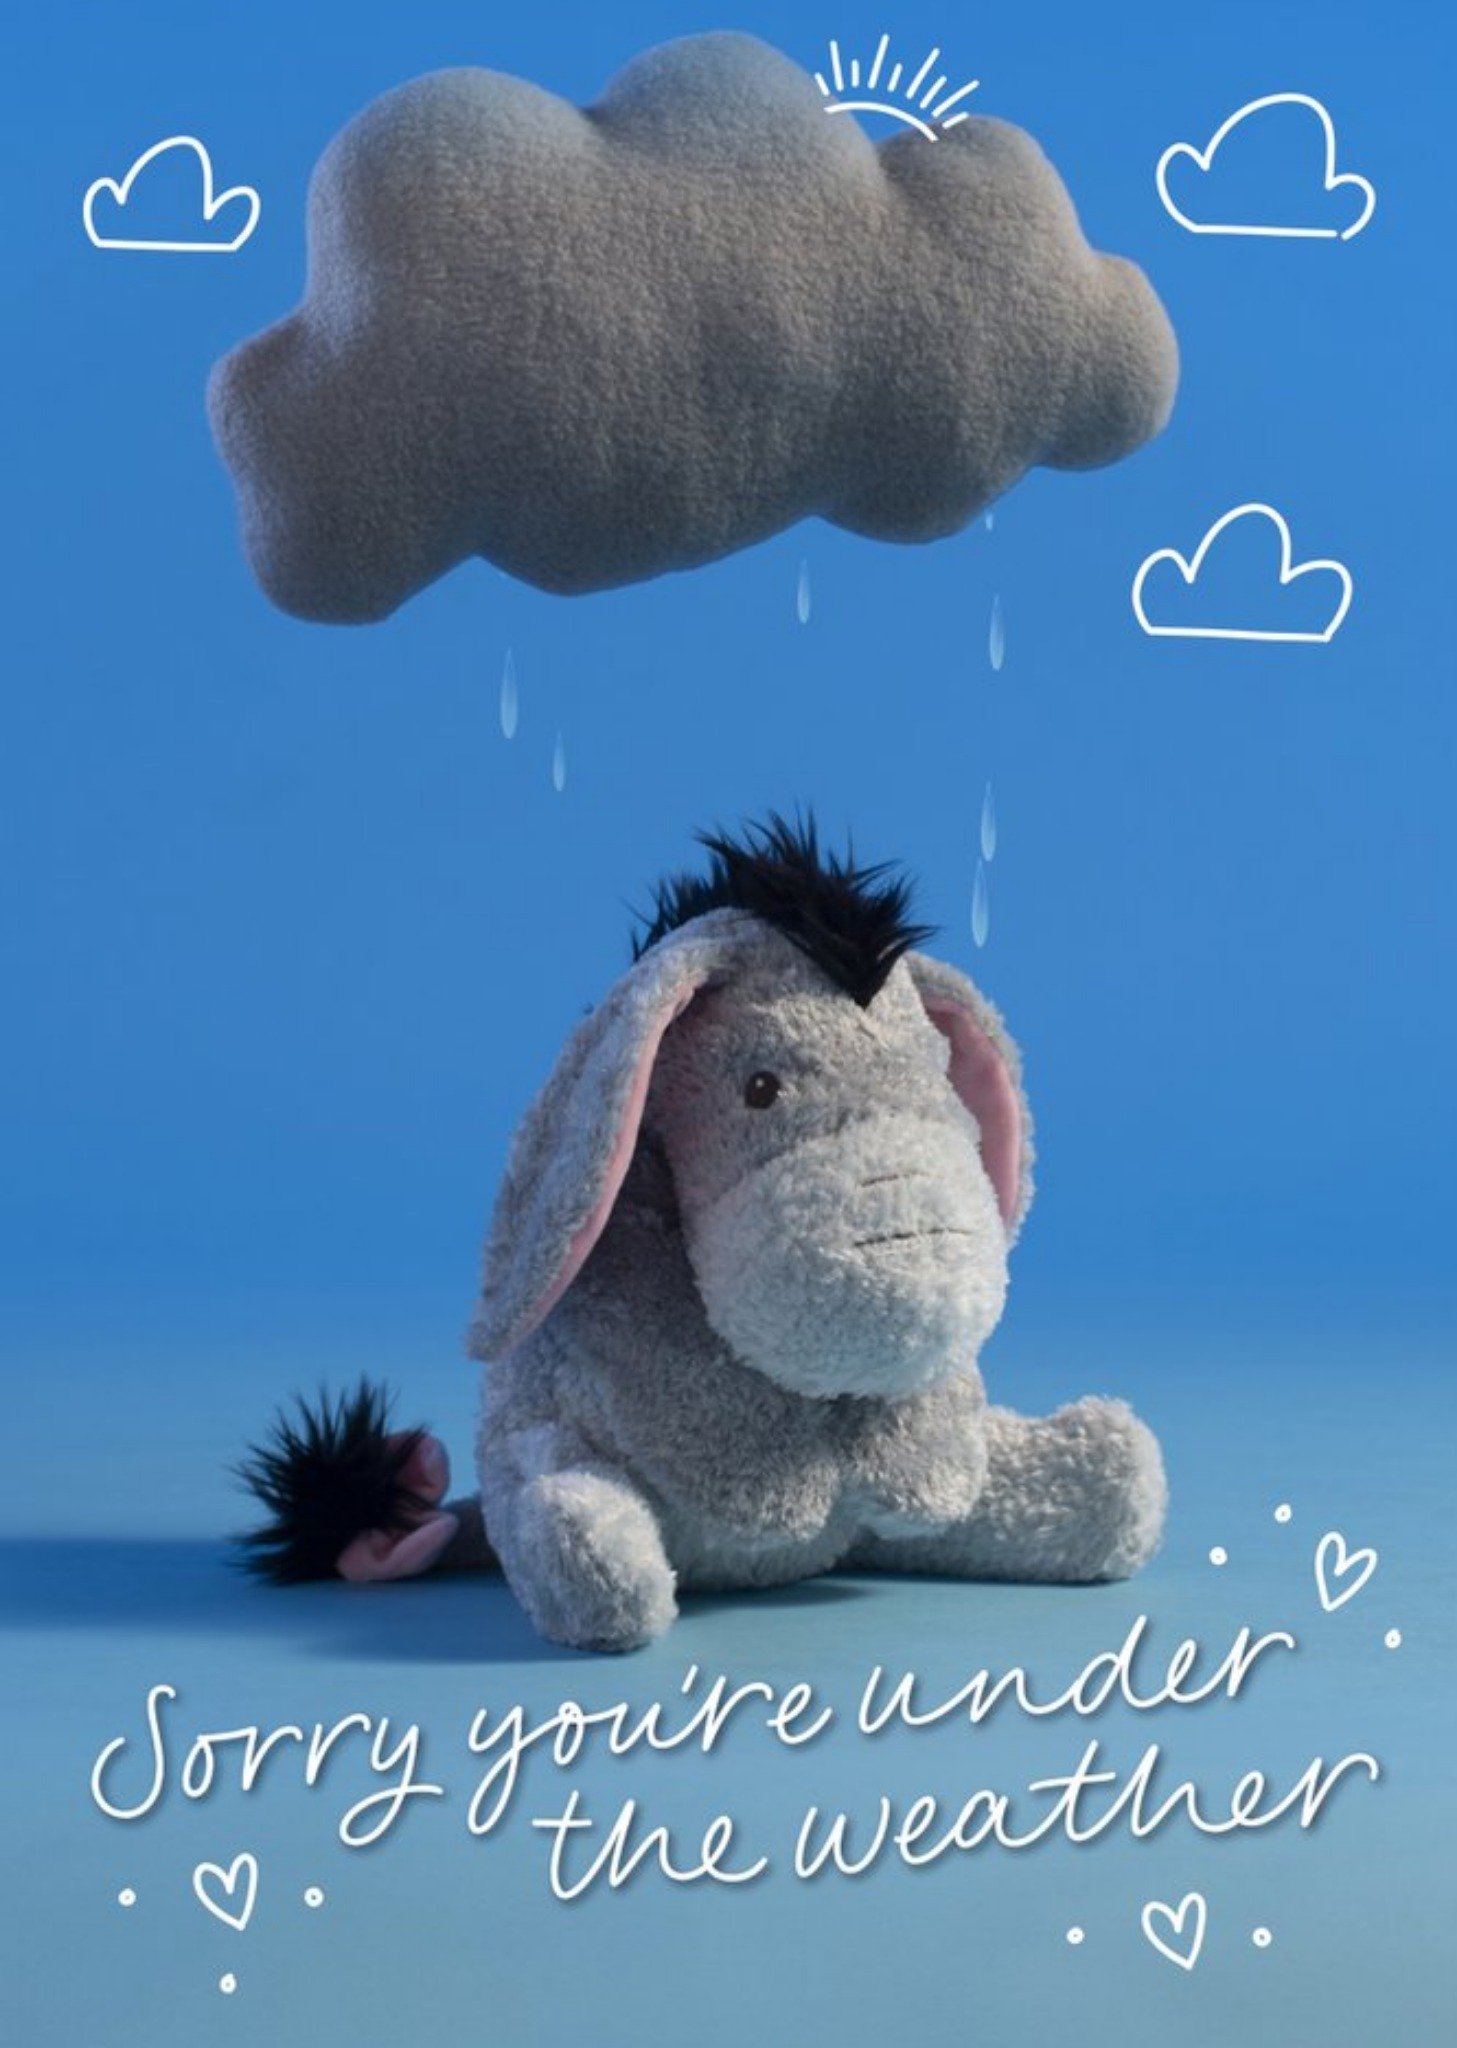 Cute Disney Plush Eeyore Under The Weather Get Well Card Ecard